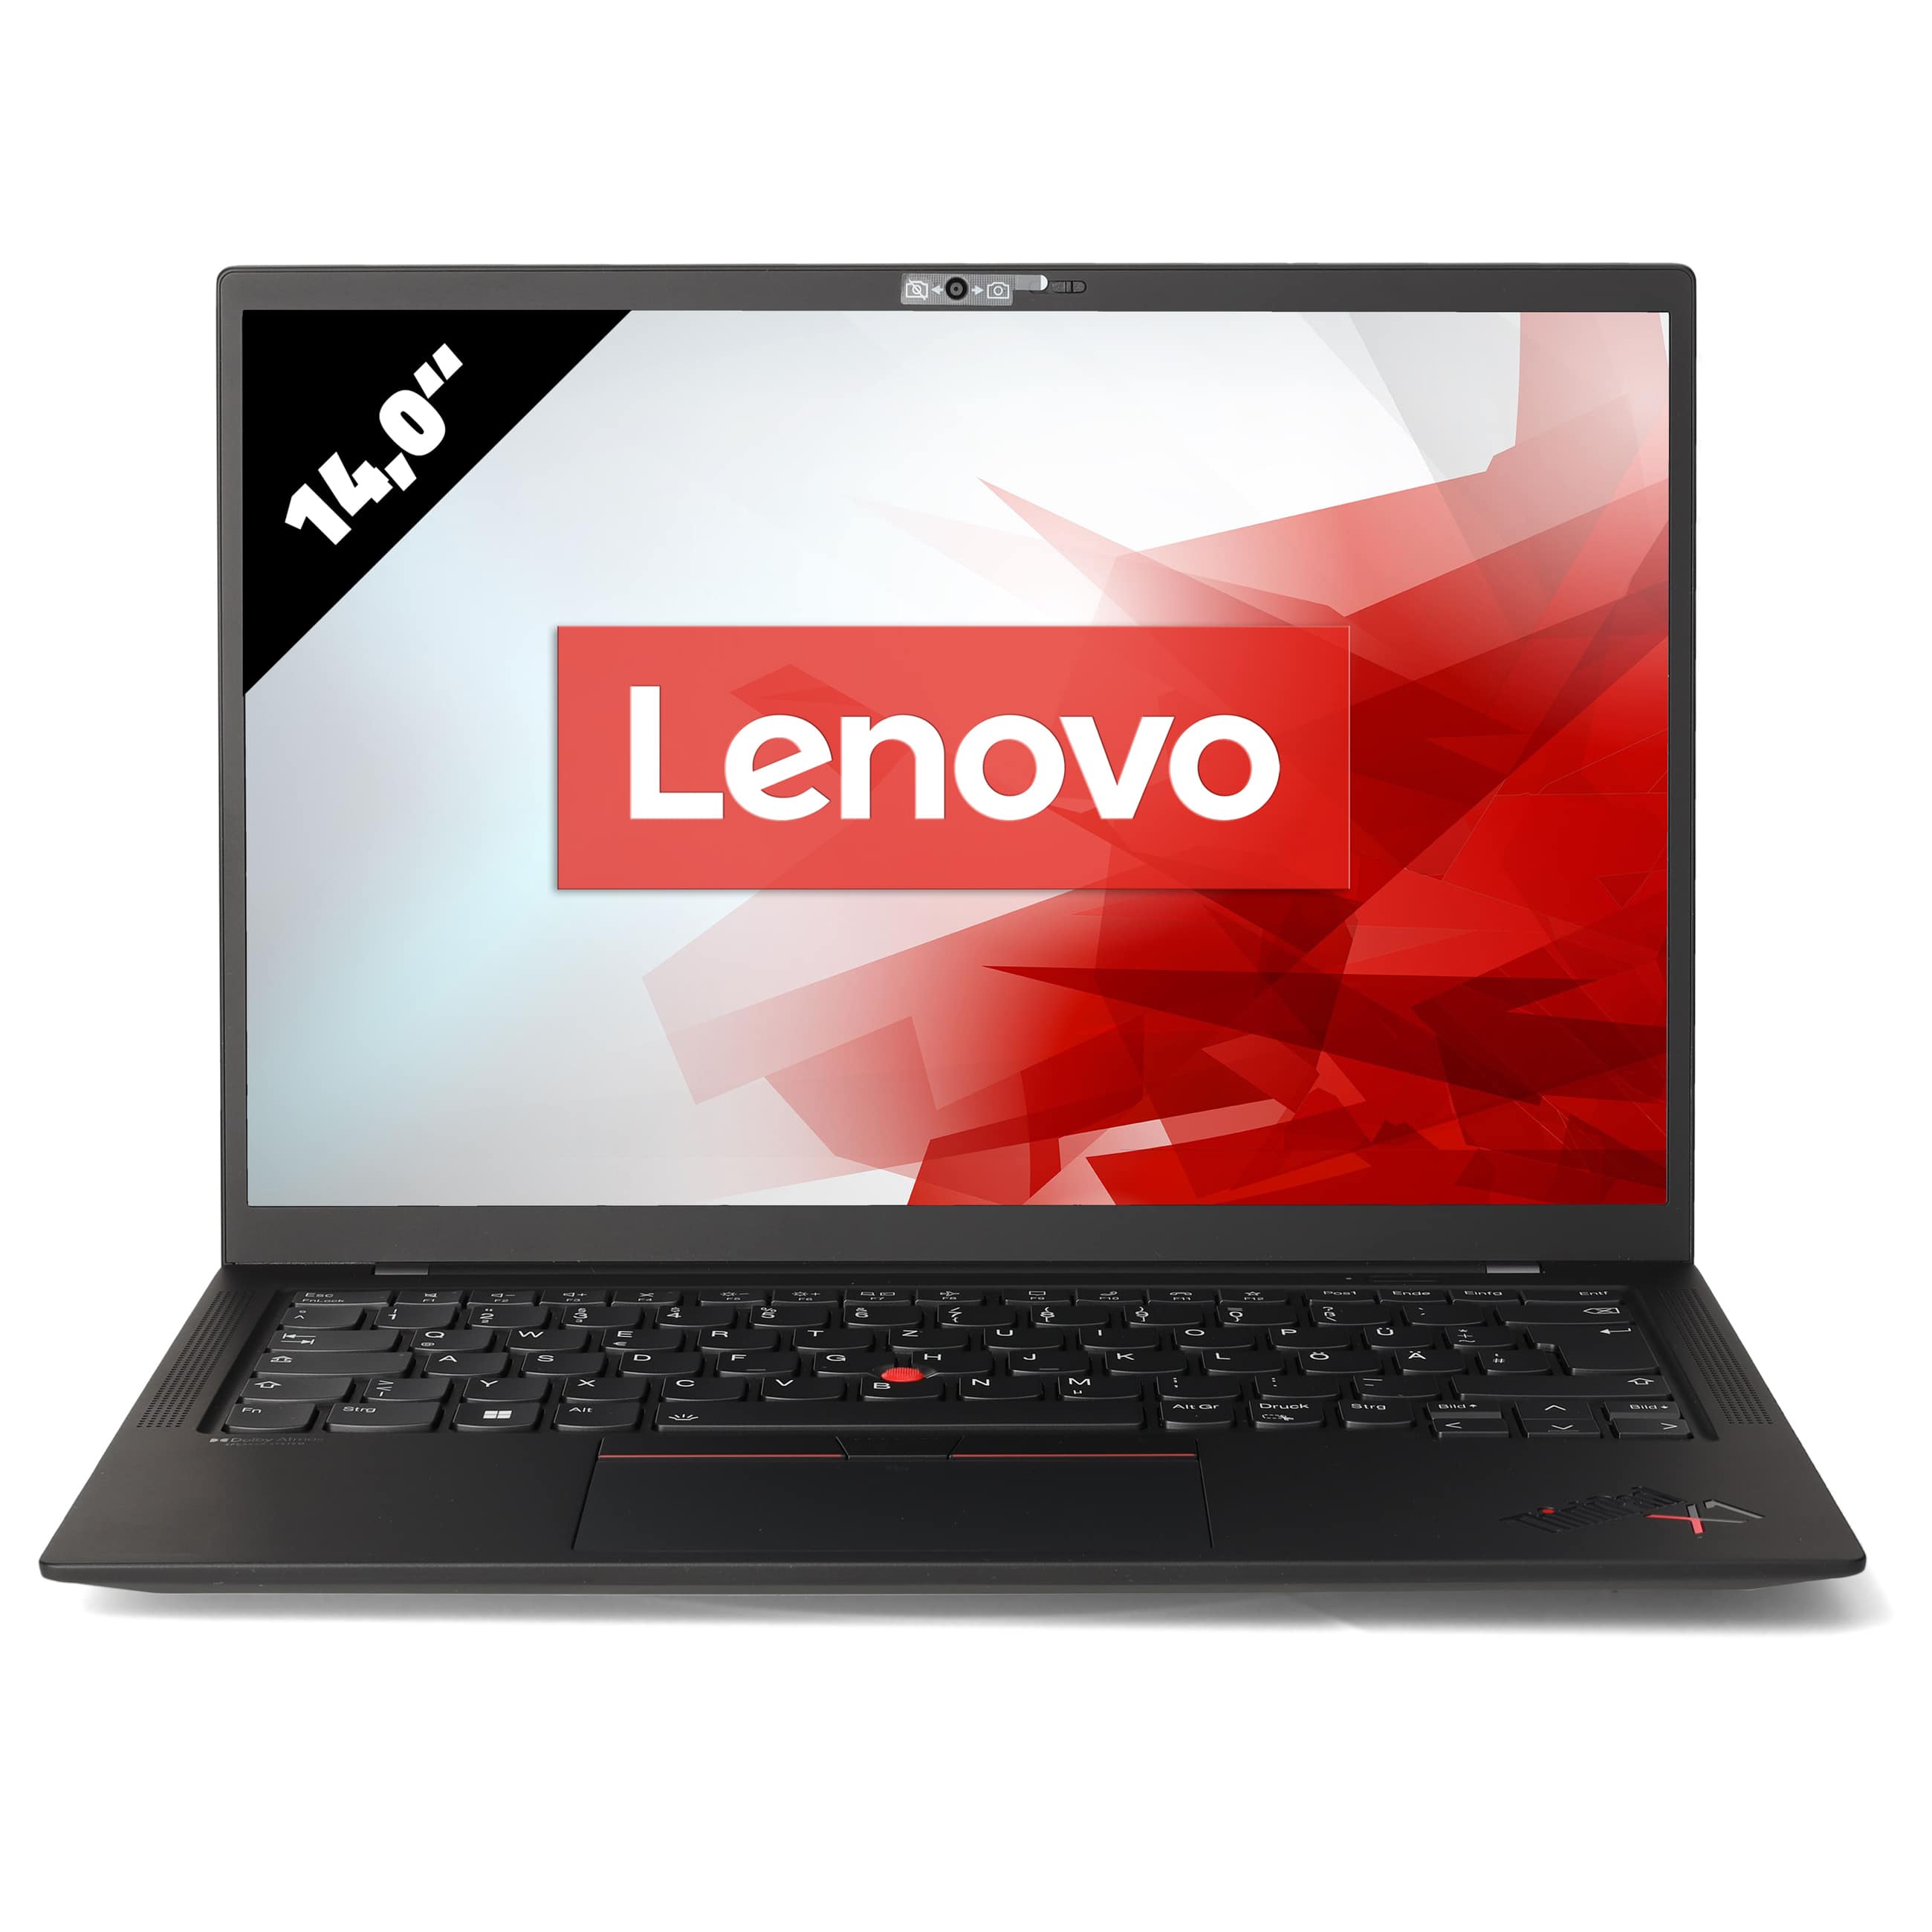 Lenovo ThinkPad X1 Carbon Gen 4 

 - 14,0 Zoll - Intel Core i7 6500U @ 2,5 GHz - 8 GB DDR3 - 250 GB SSD - 2560 x 1440 WQHD - Windows 10 Professional